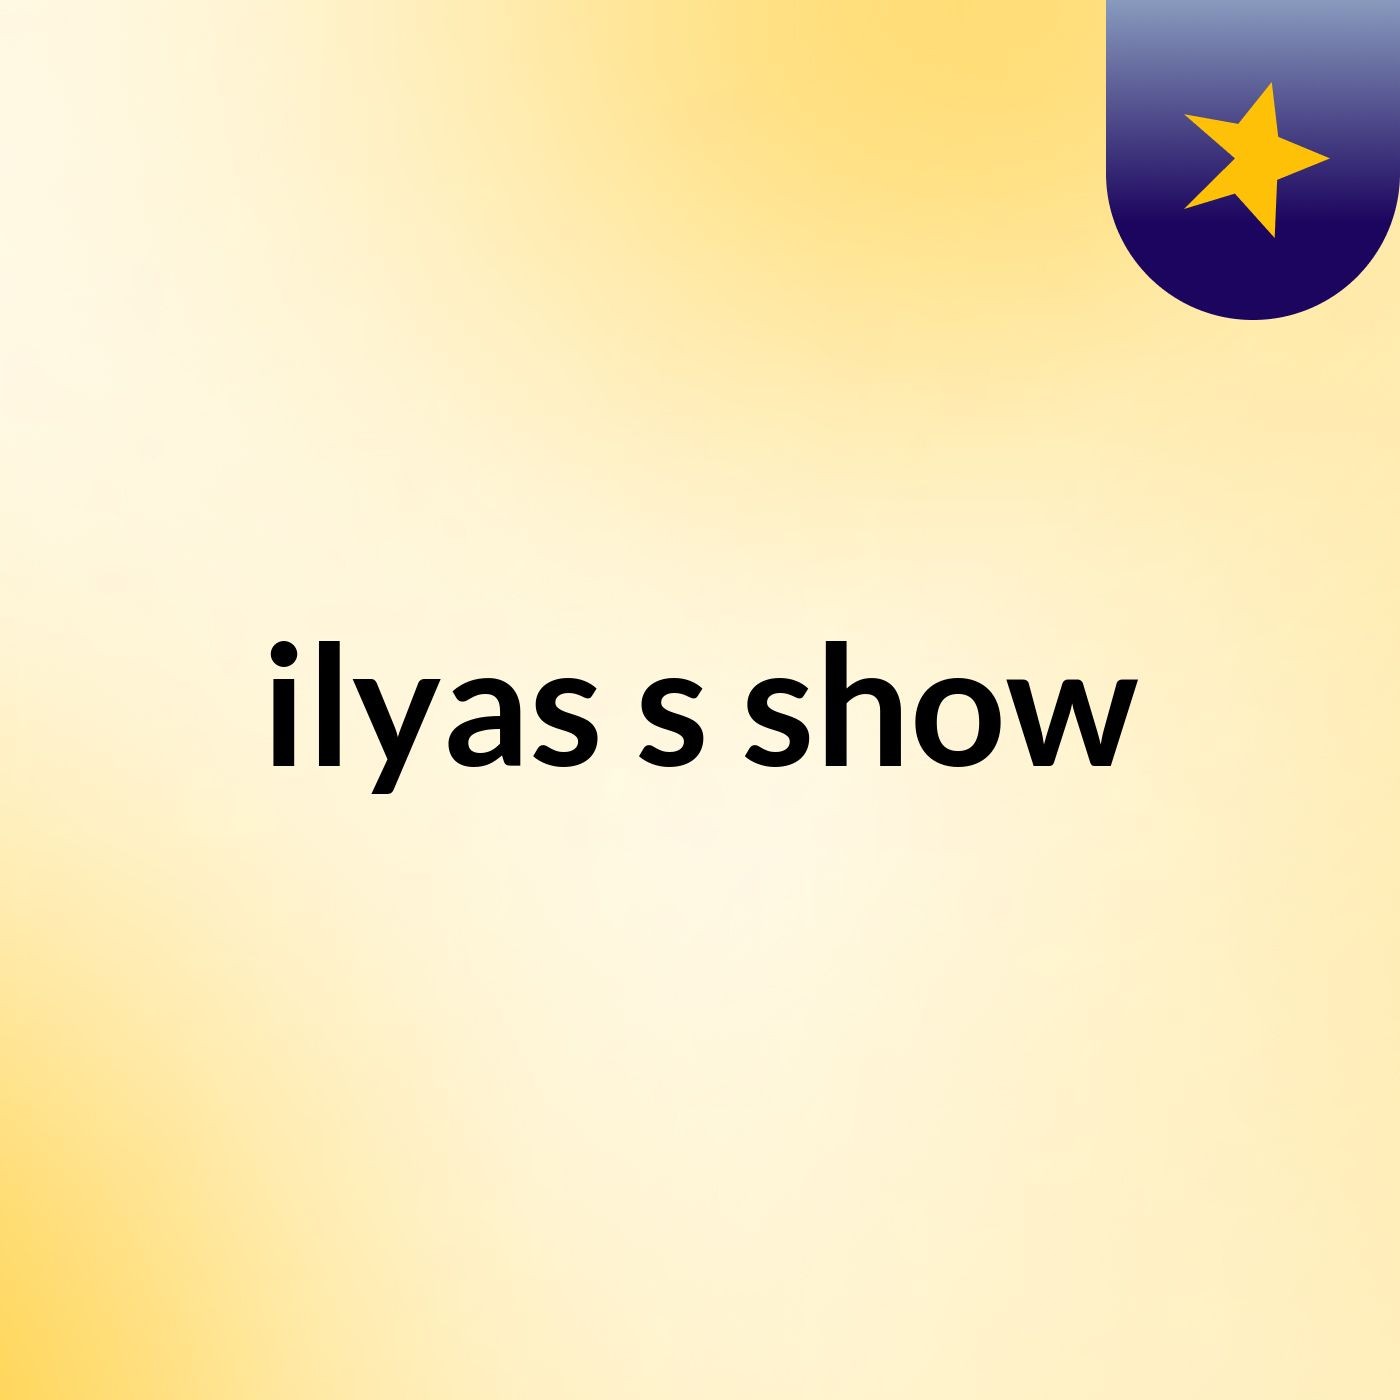 ilyas's show